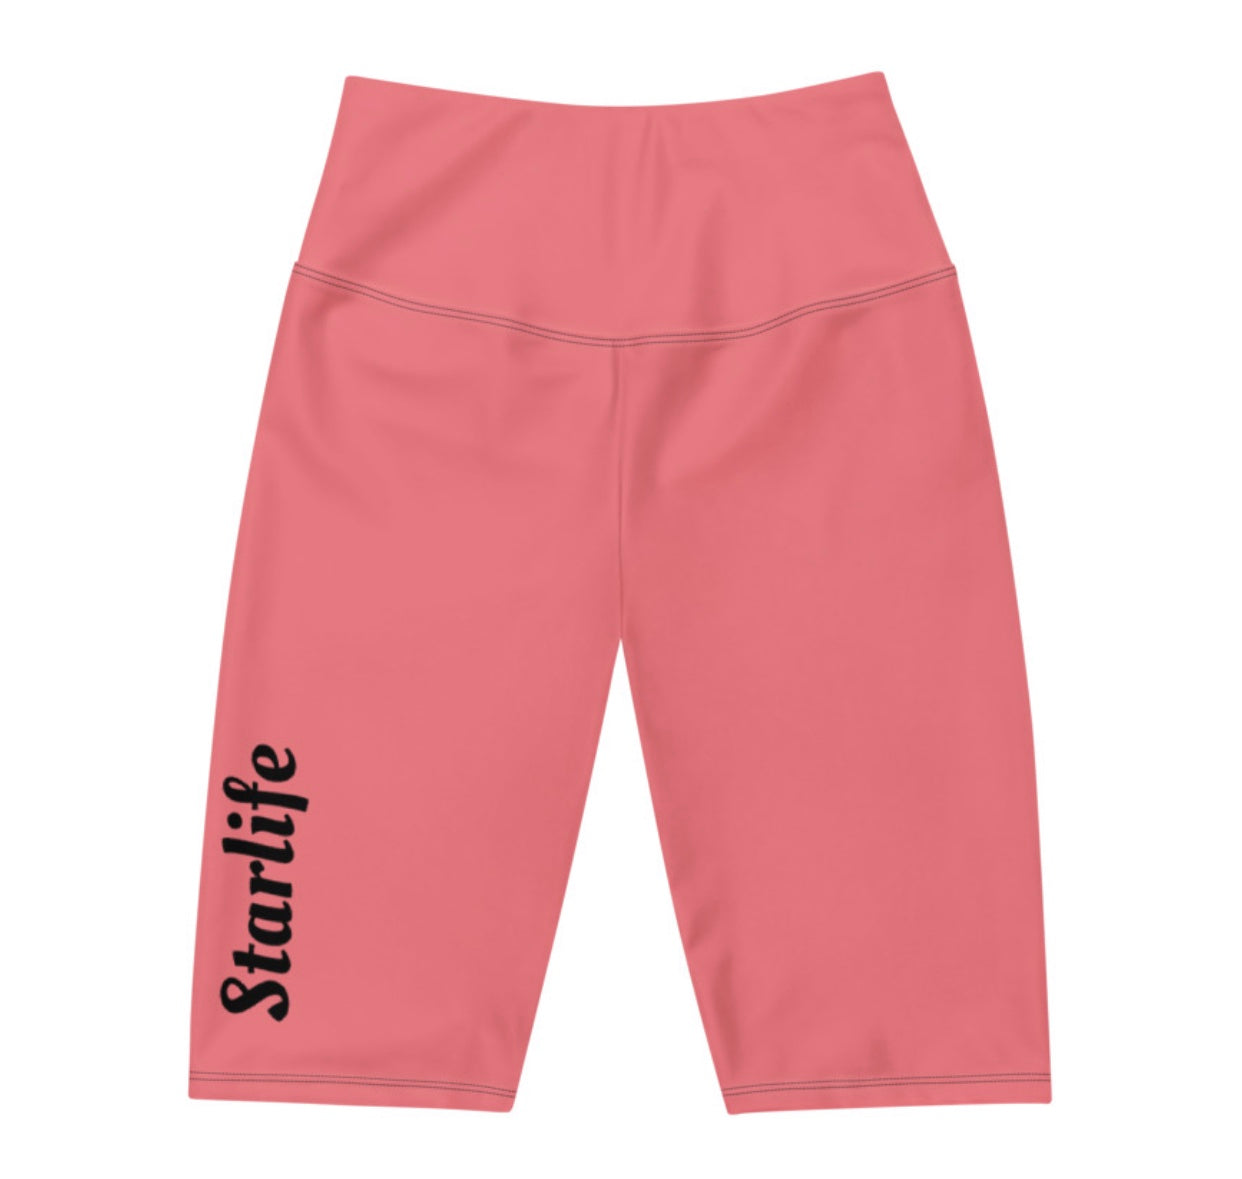 Starlife Women’s Biker Shorts (Pink Berry)